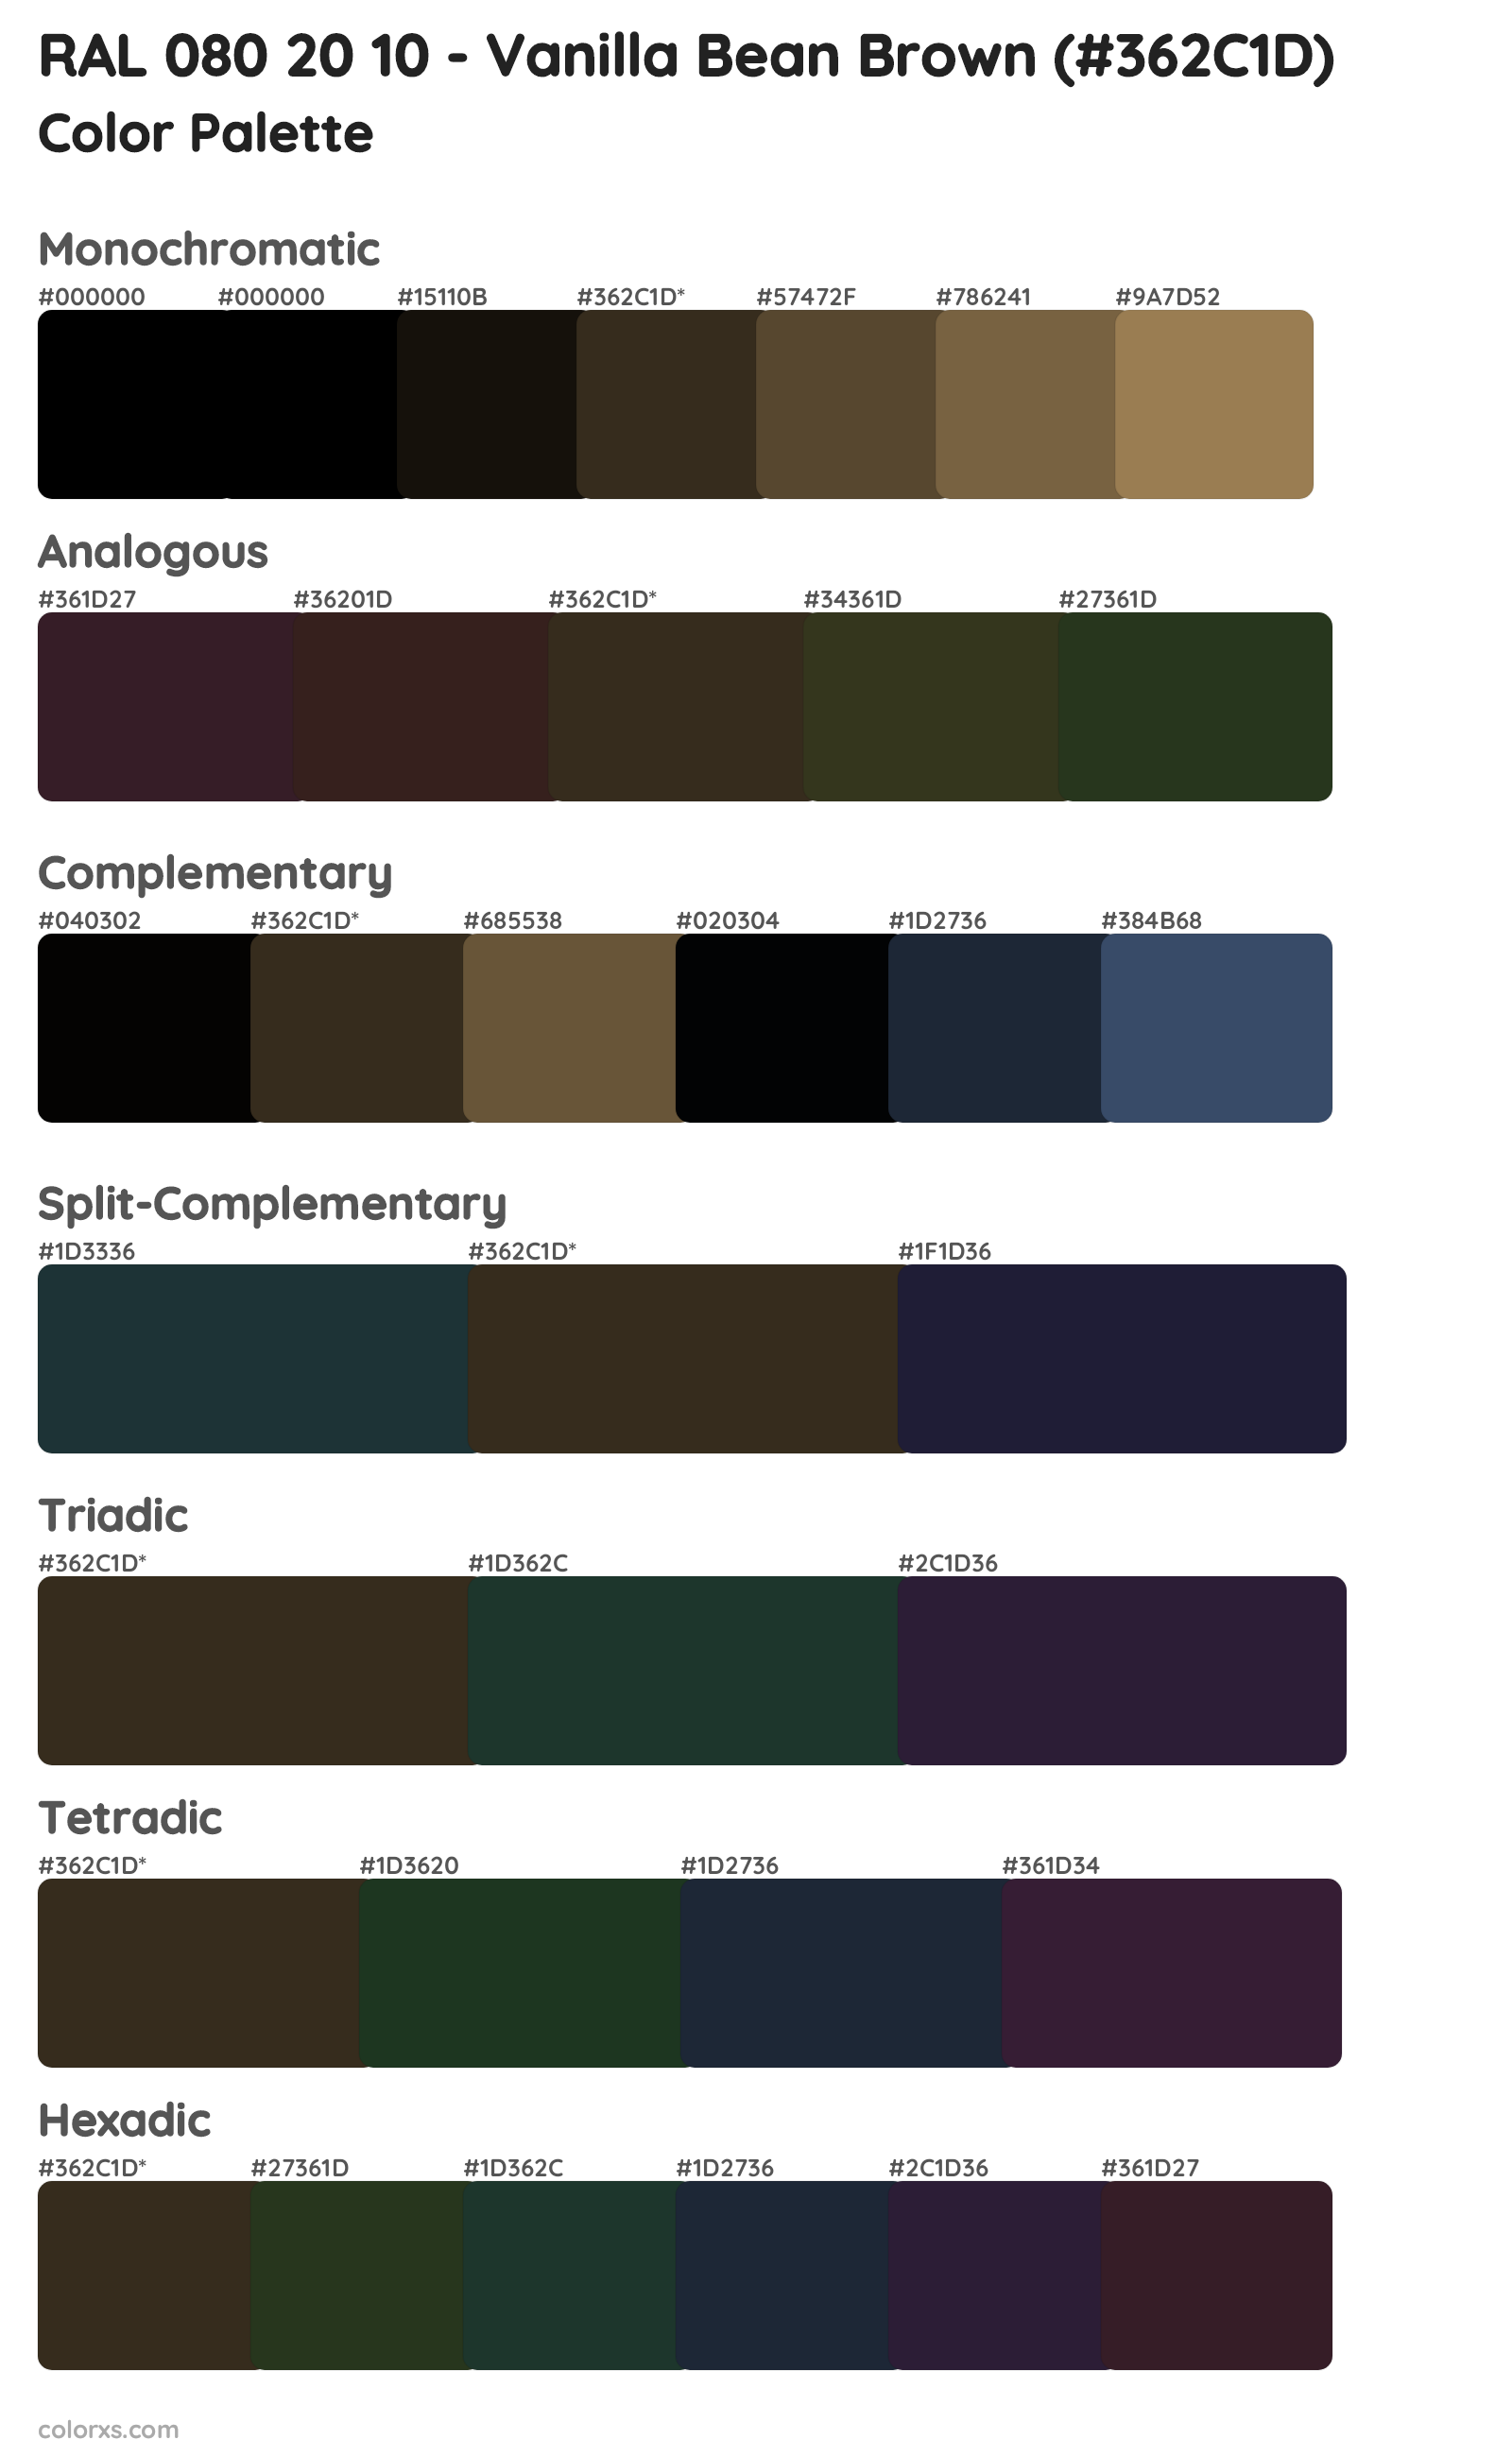 RAL 080 20 10 - Vanilla Bean Brown Color Scheme Palettes